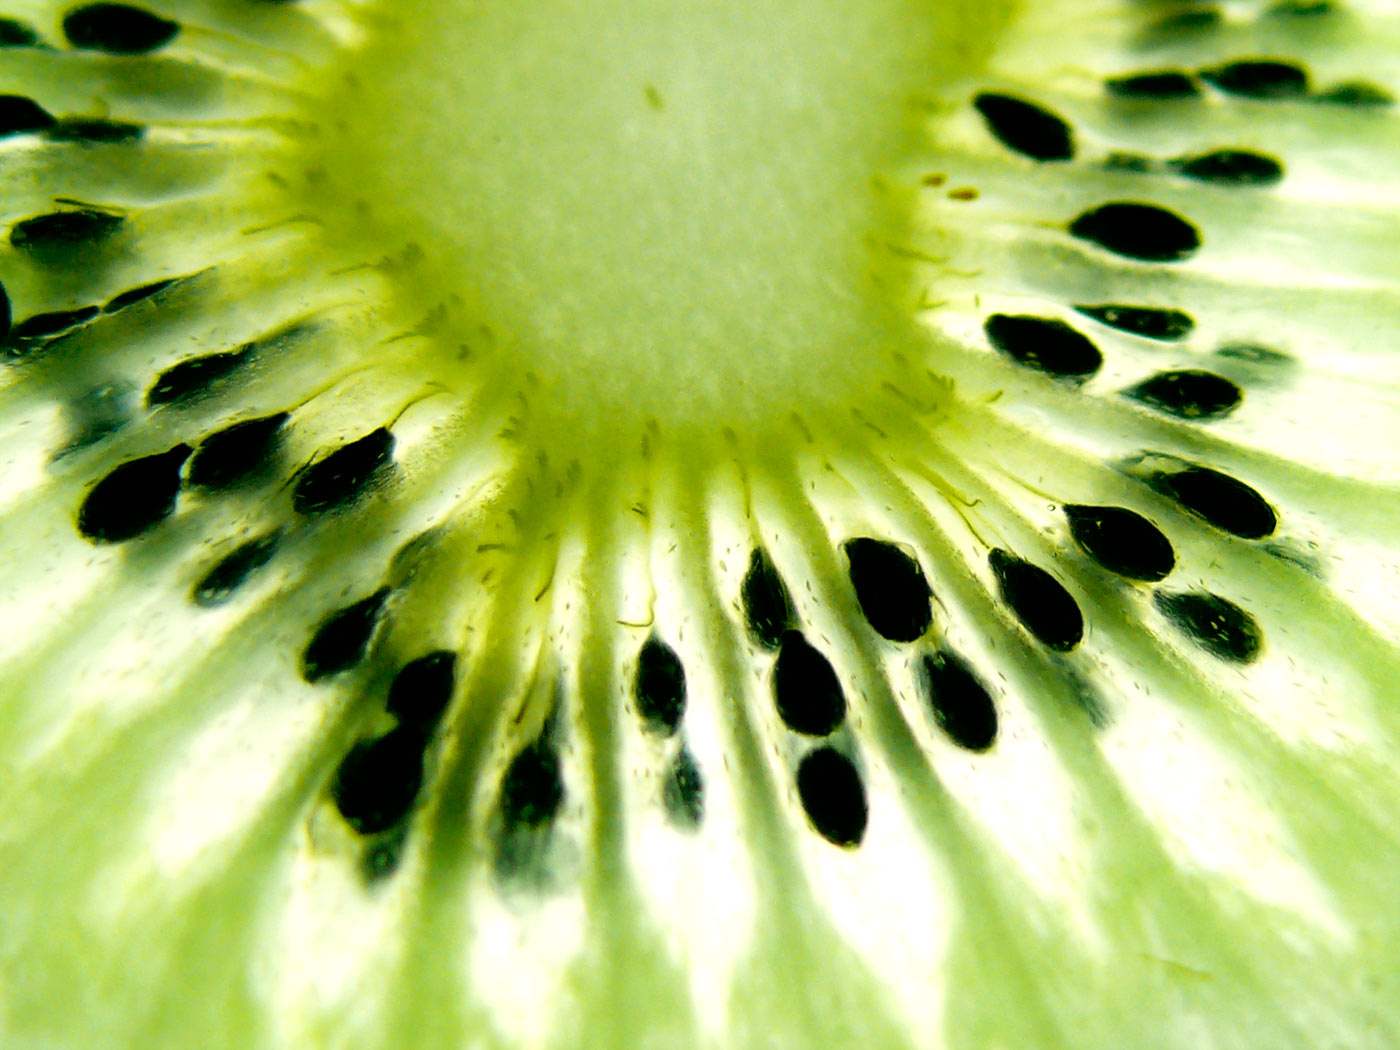 Kiwi seeds, copyright Picturejockey : Navin Harish 2005-2014